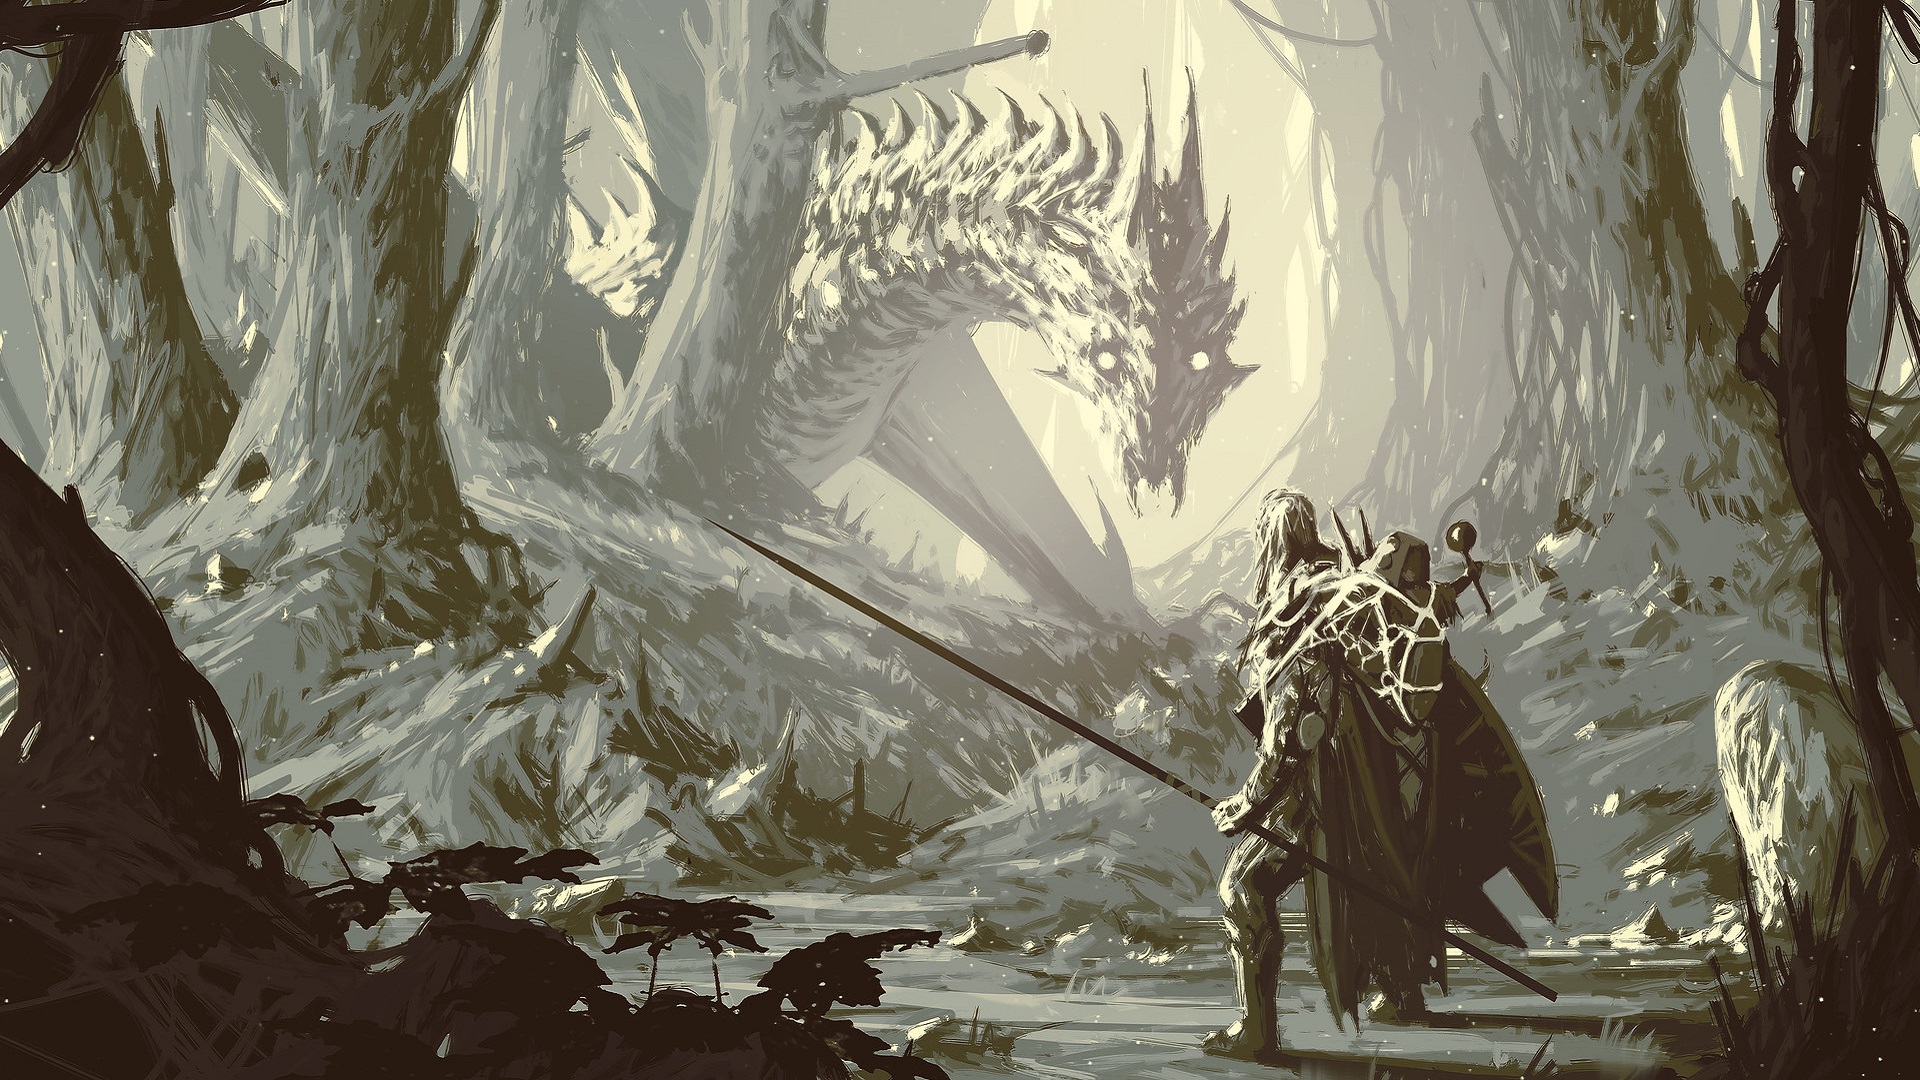 General 1920x1080 dragon Wyvern spear forest monochrome fantasy art mist